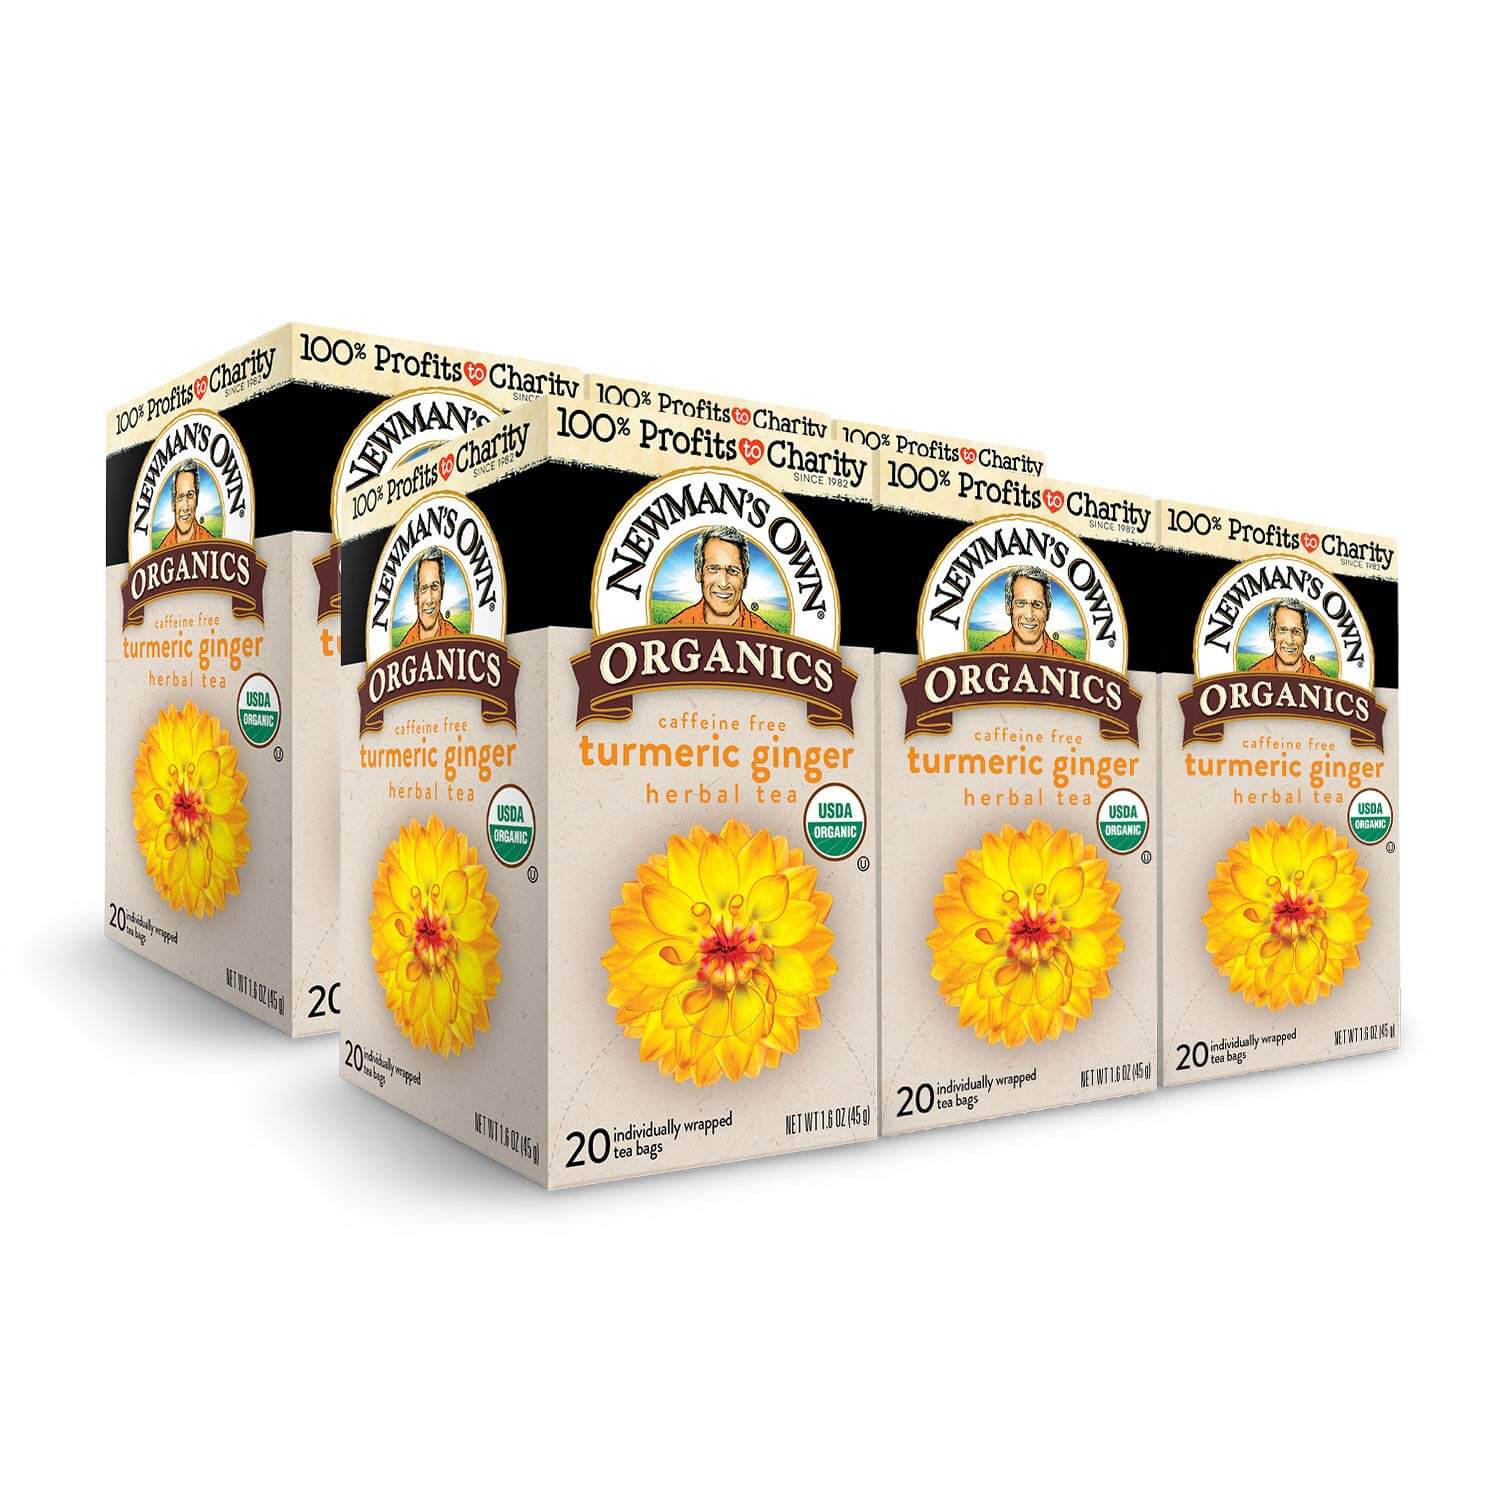 Newman's Own Organics Turmeric Ginger Herbal Tea